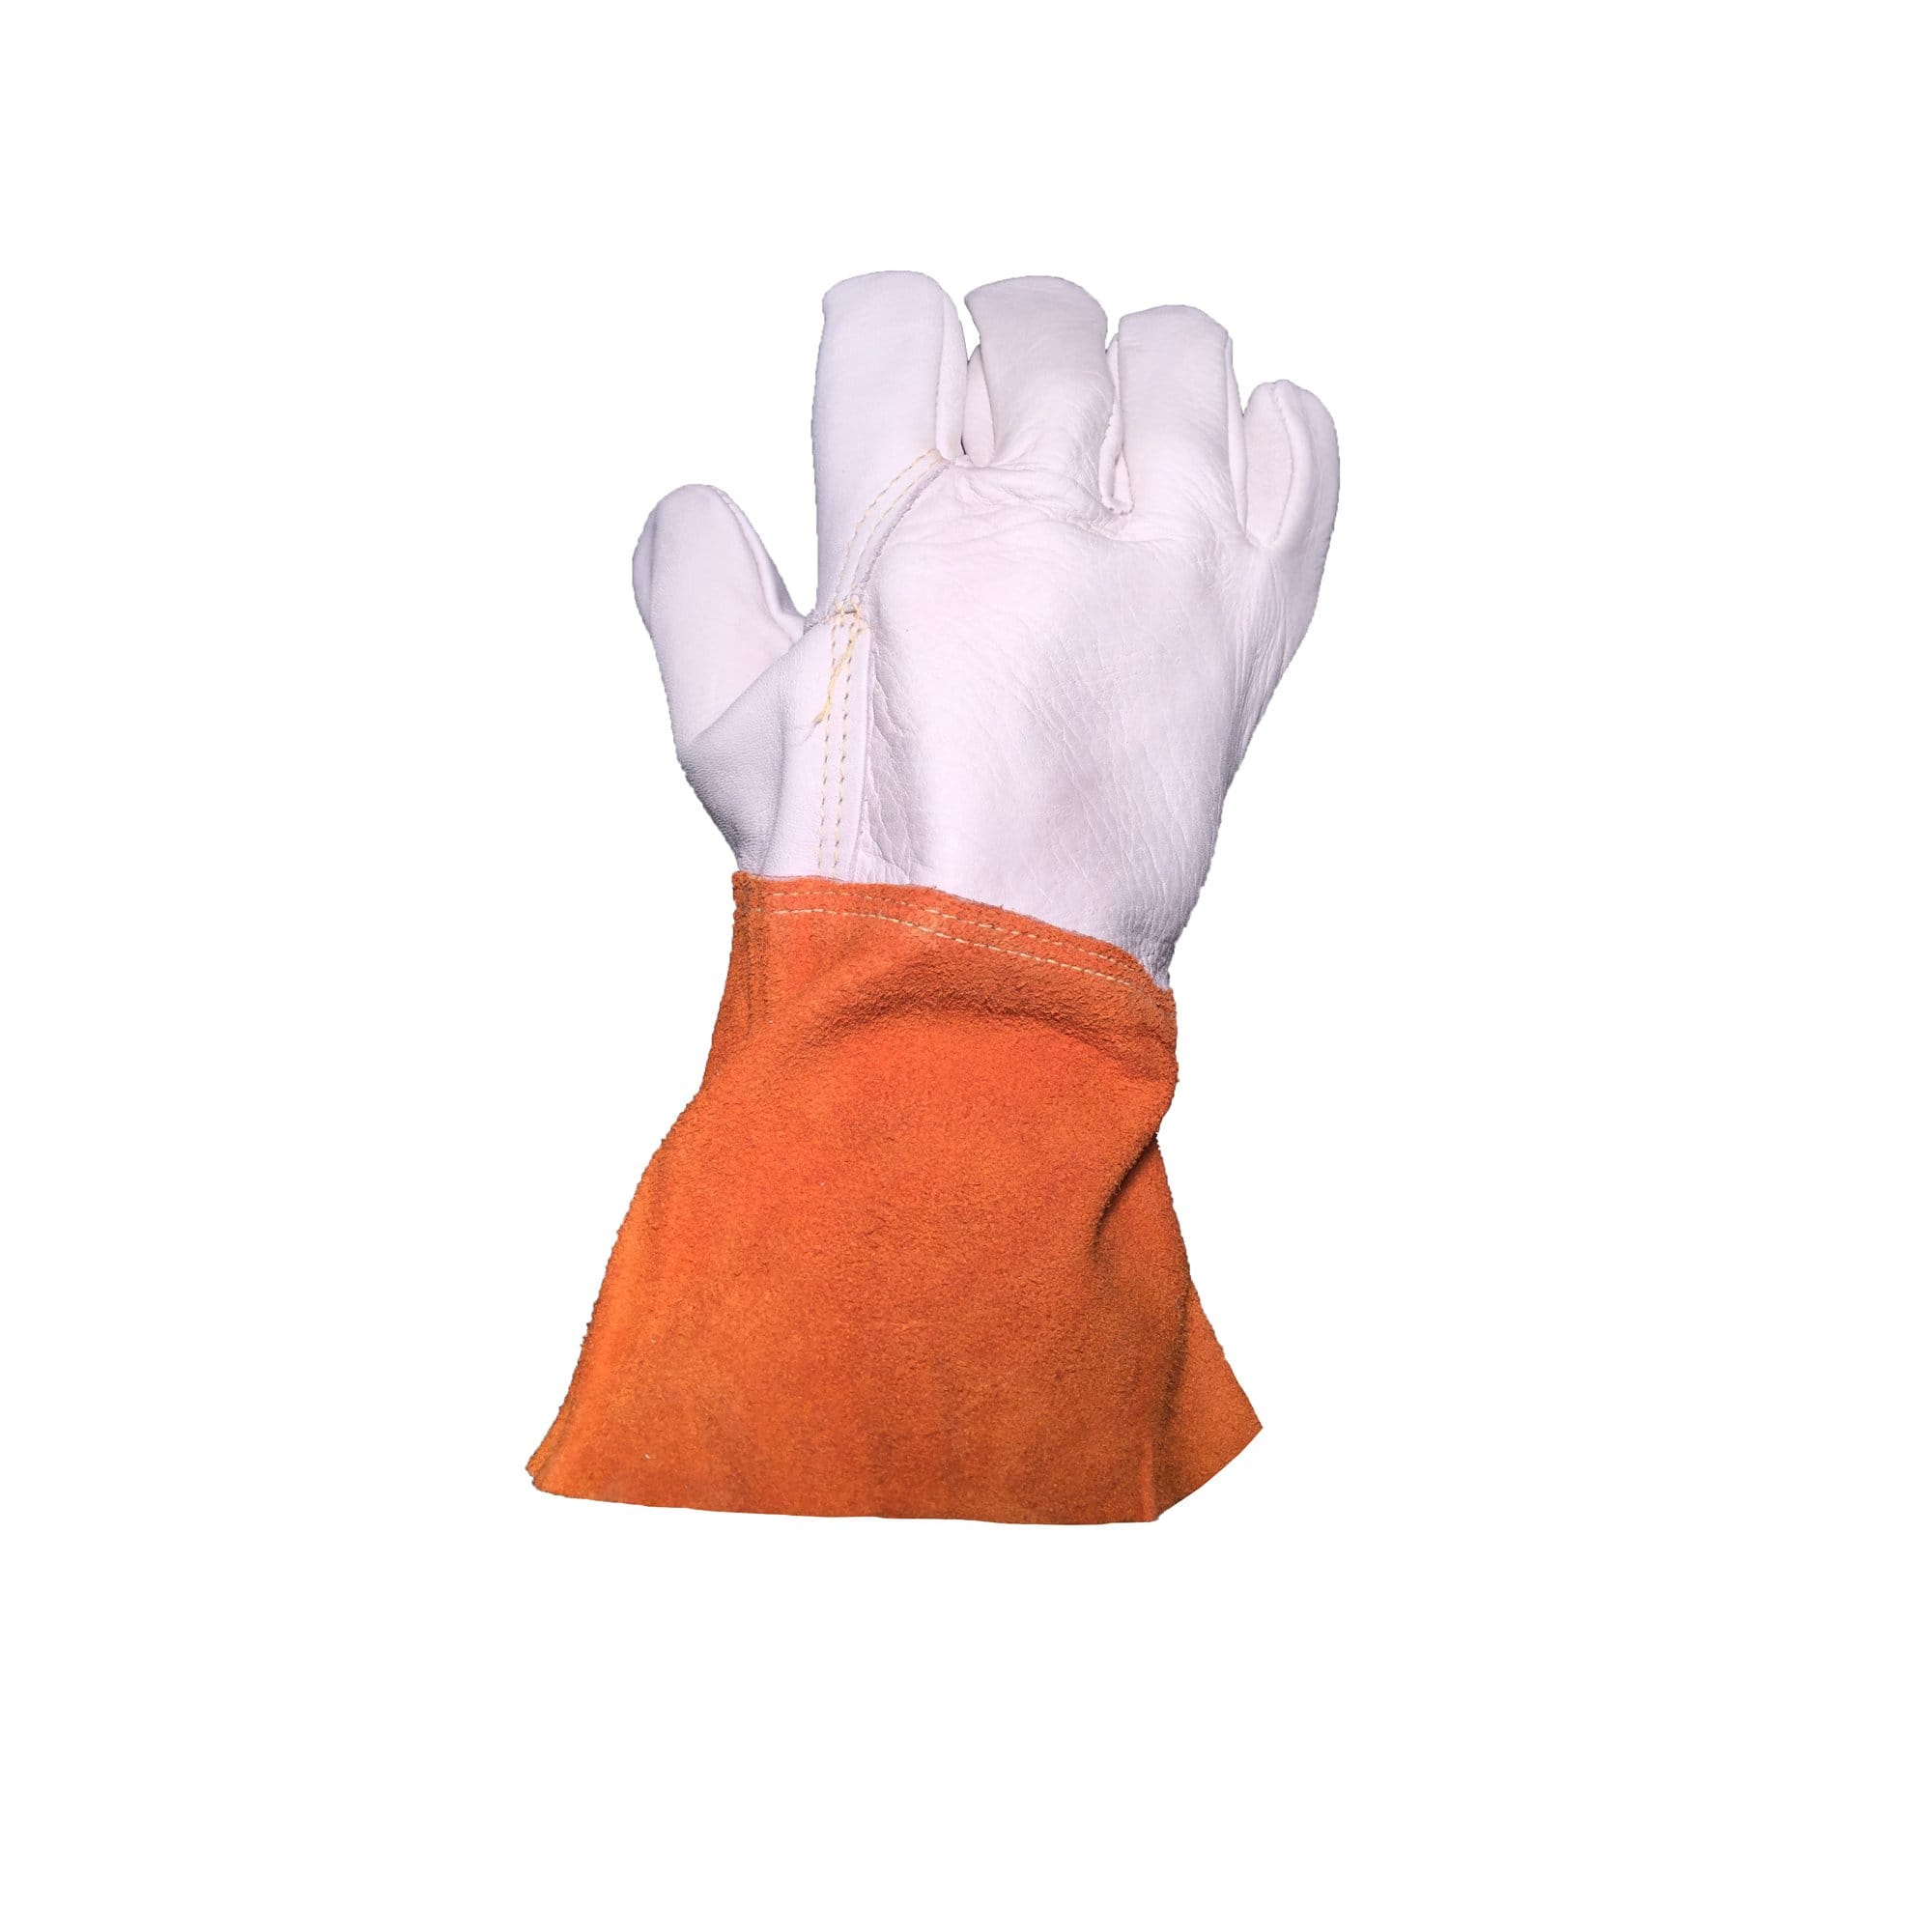 leather light duty work gloves - leather light duty work gloves - fruit picking gloves